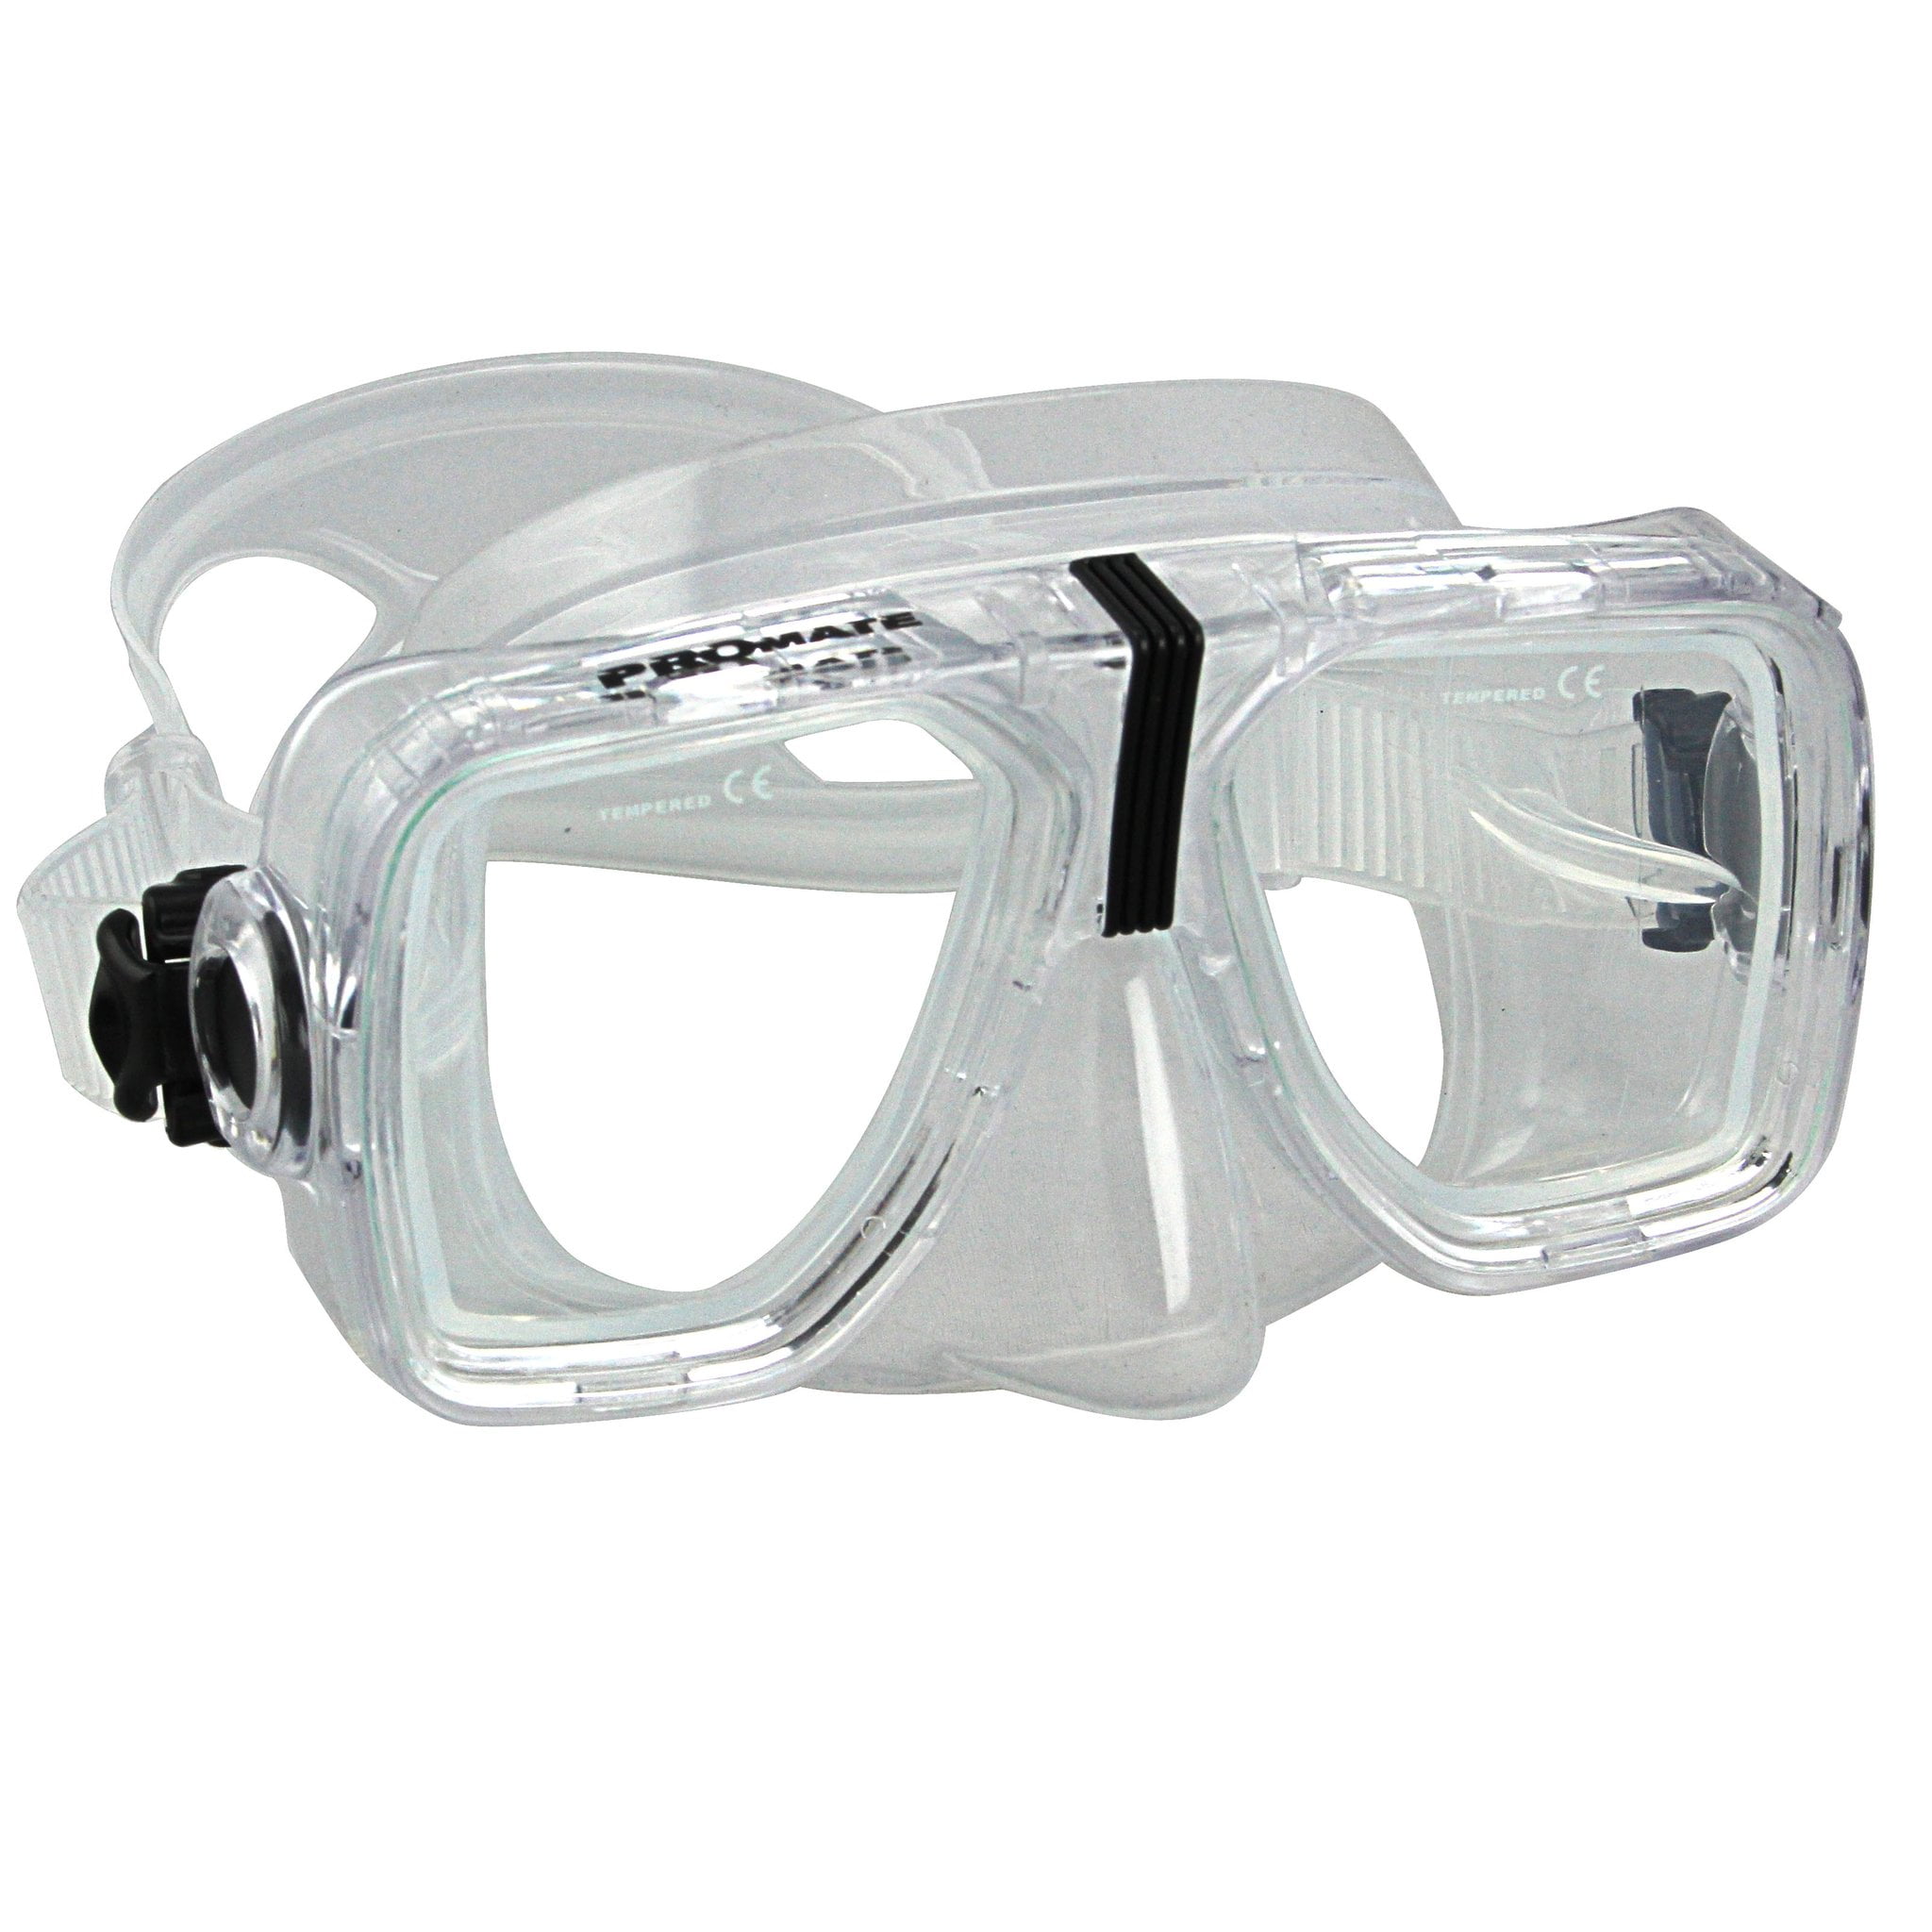 Prescription Diving Mask Optical Nearsighted Myopia Lenses Fits GoPro Camera 